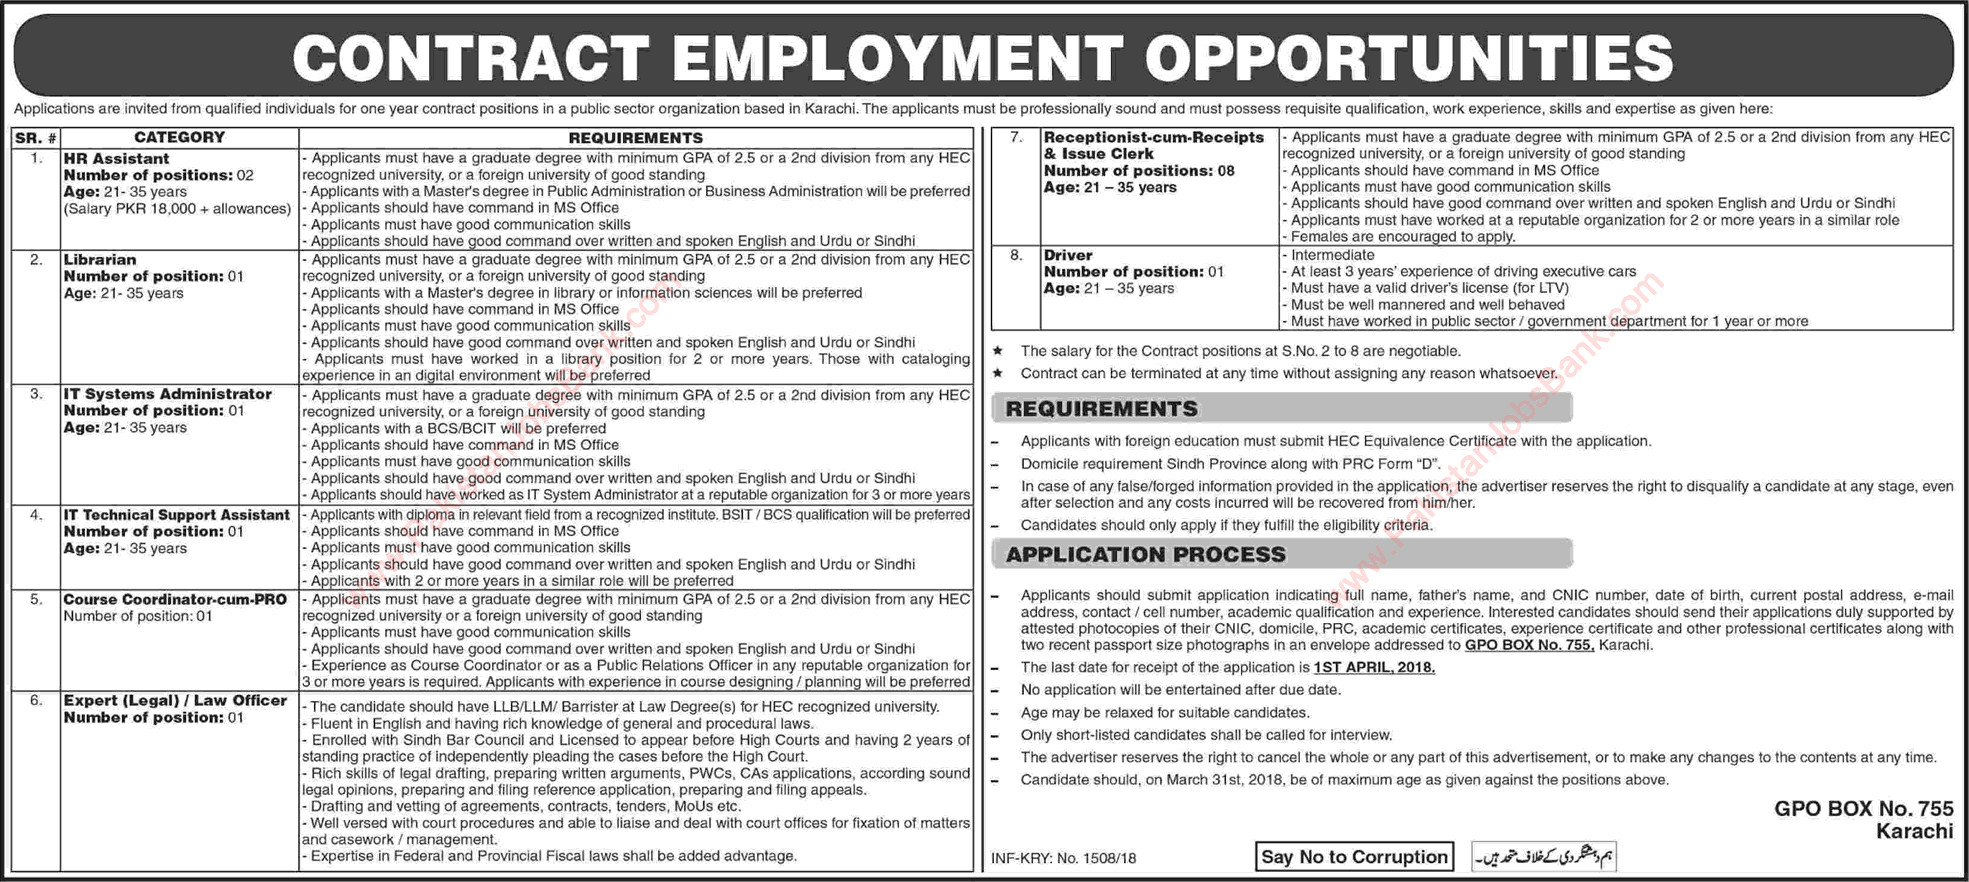 PO Box 755 Karachi Jobs 2018 March Receptionists / Clerks, HR Assistants & Others Latest